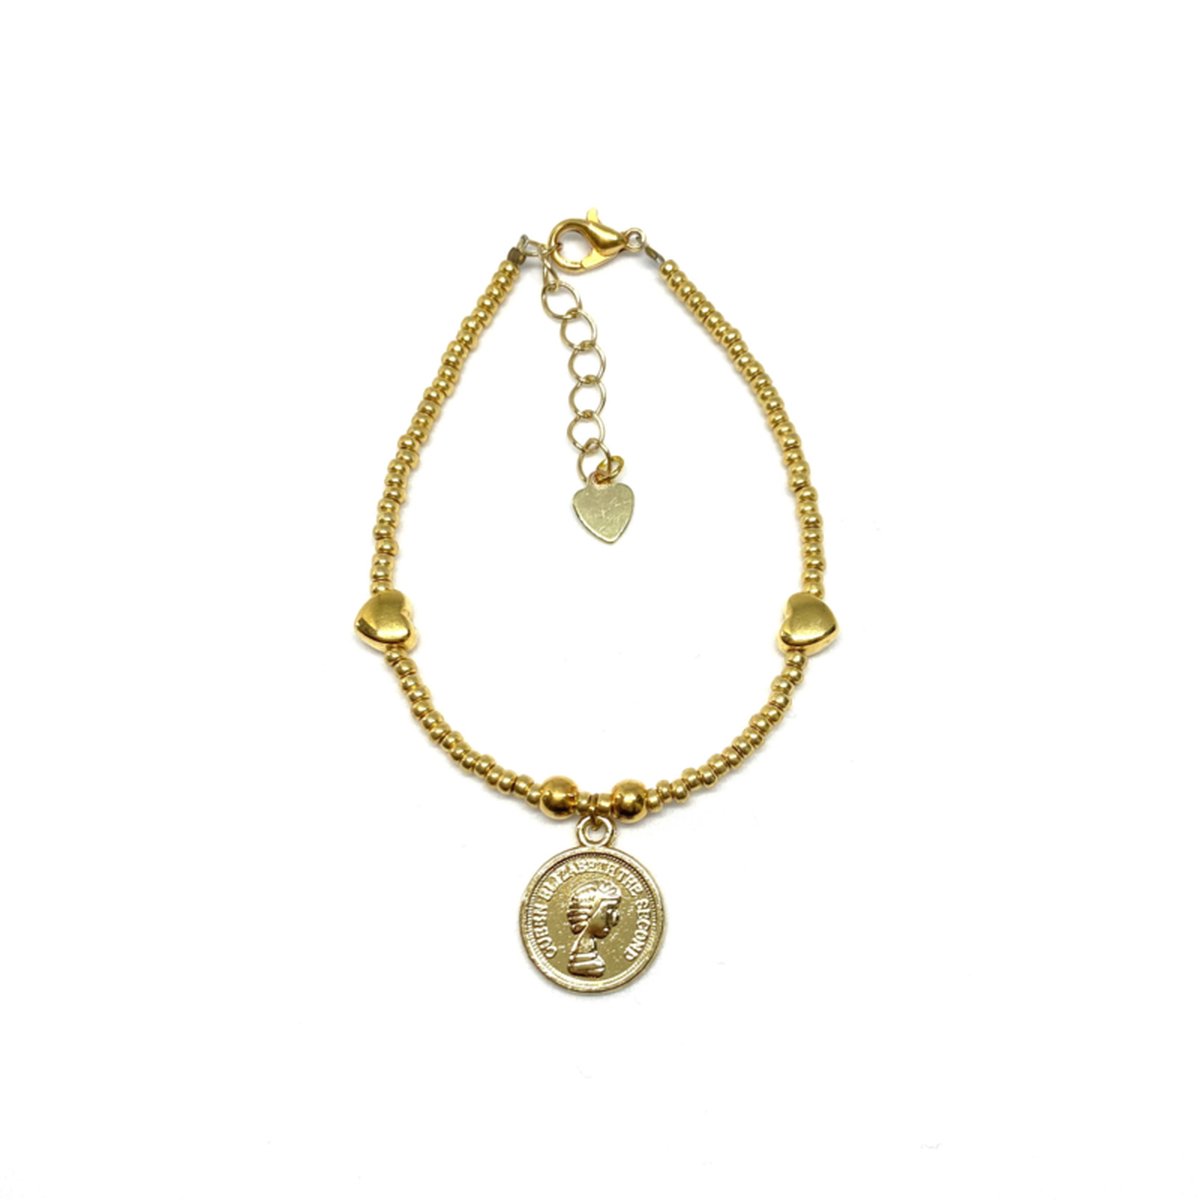 Bracelet with an Elizabeth coin - gold